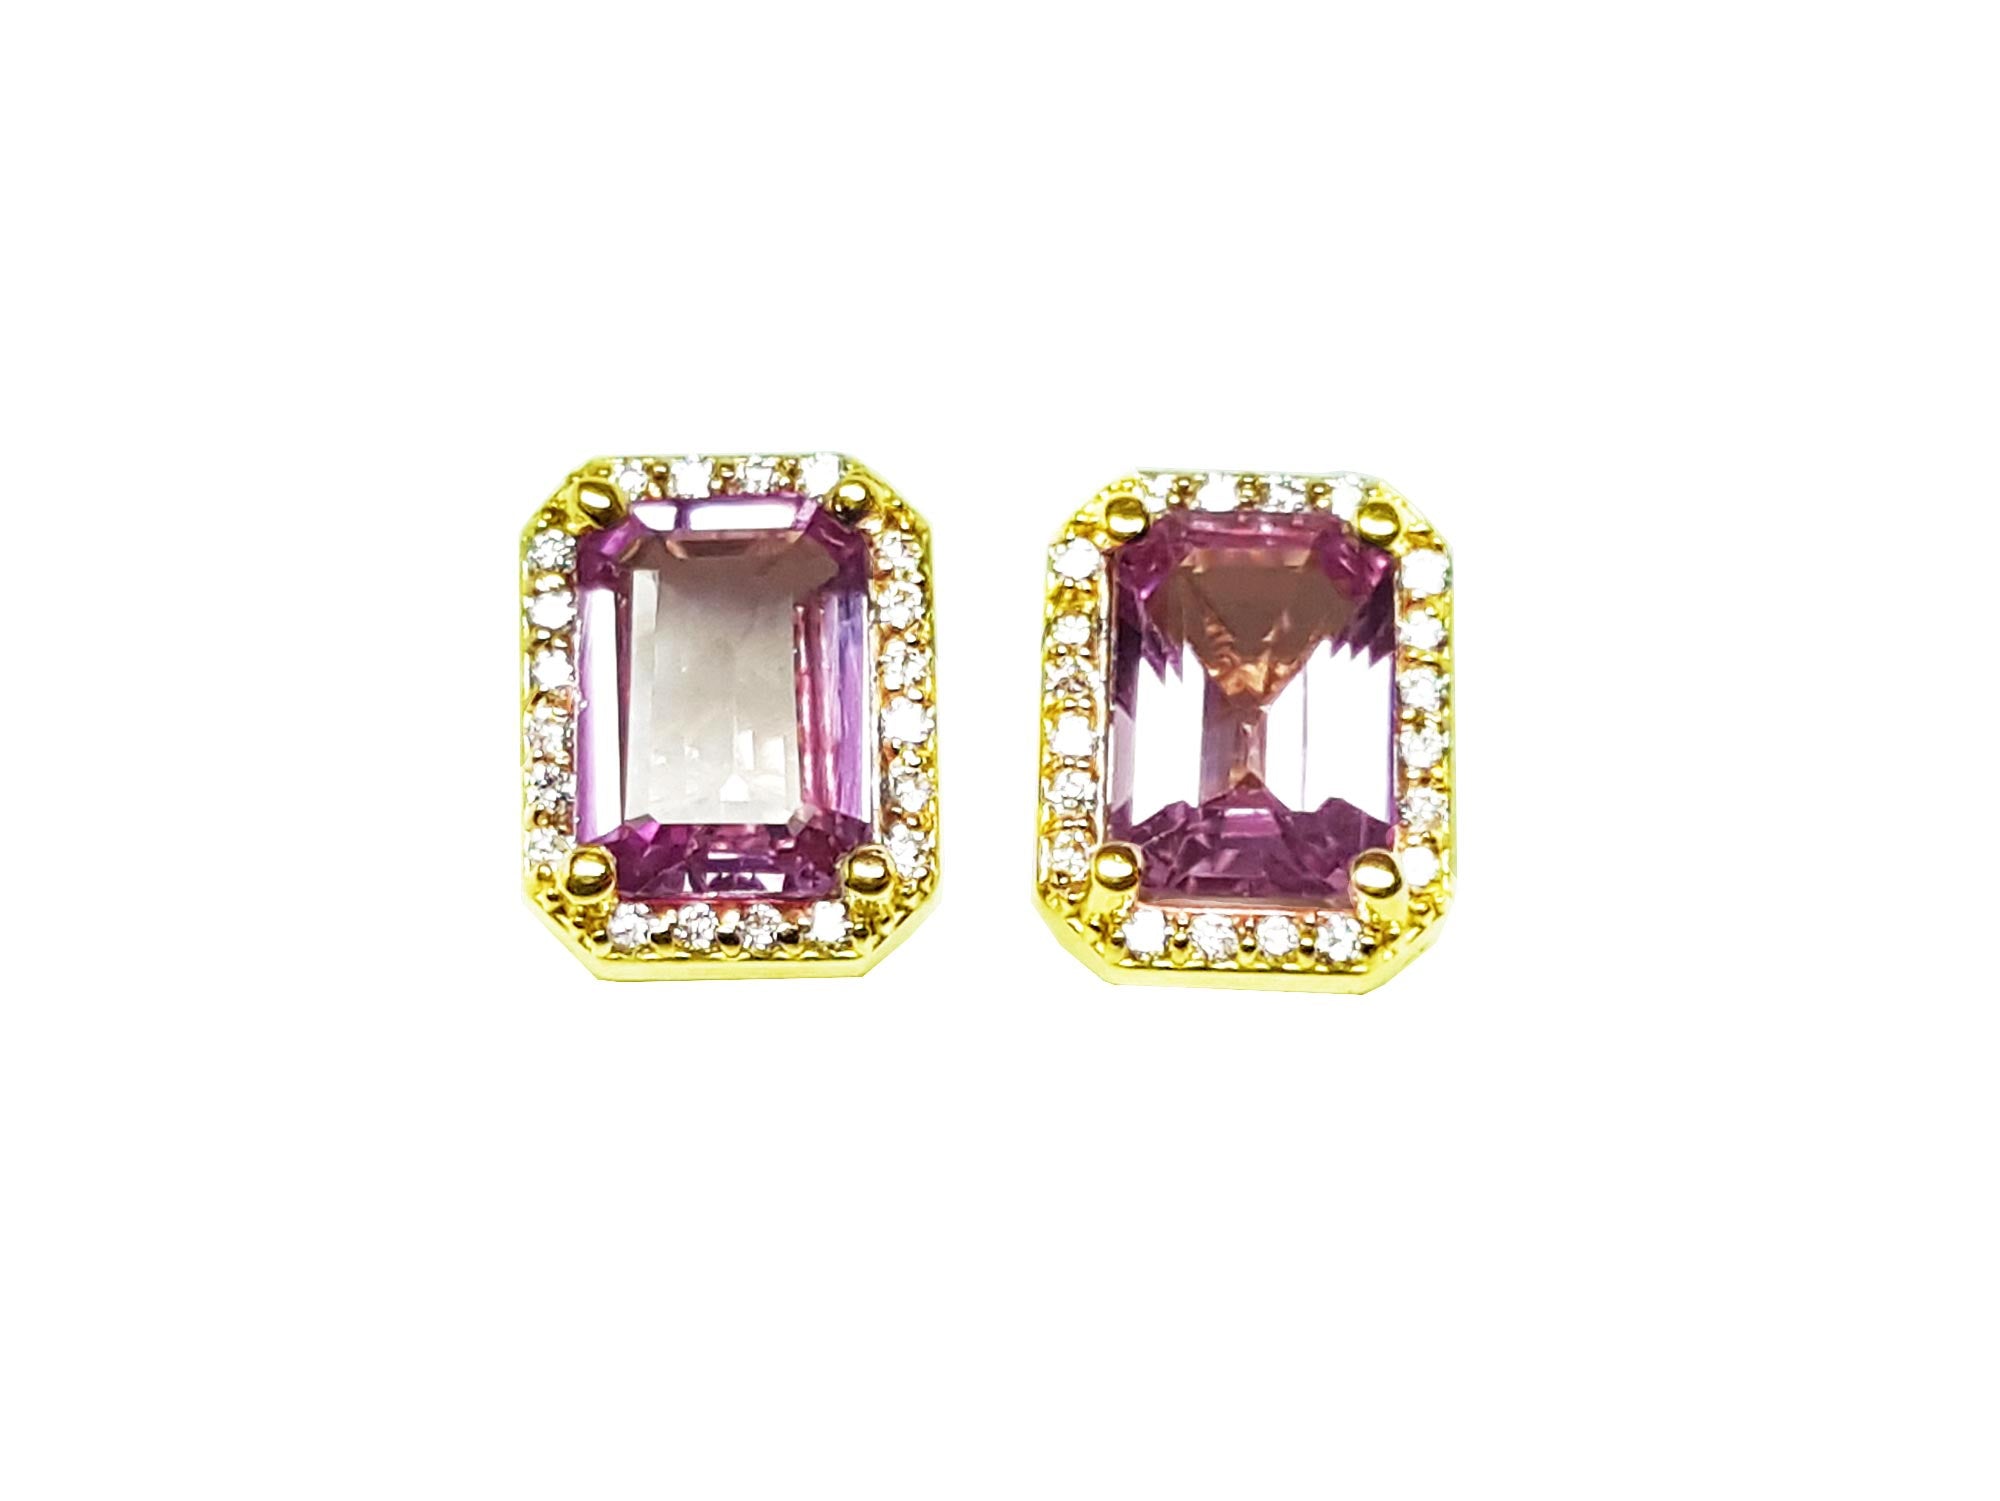 Pink sapphire stud earrings